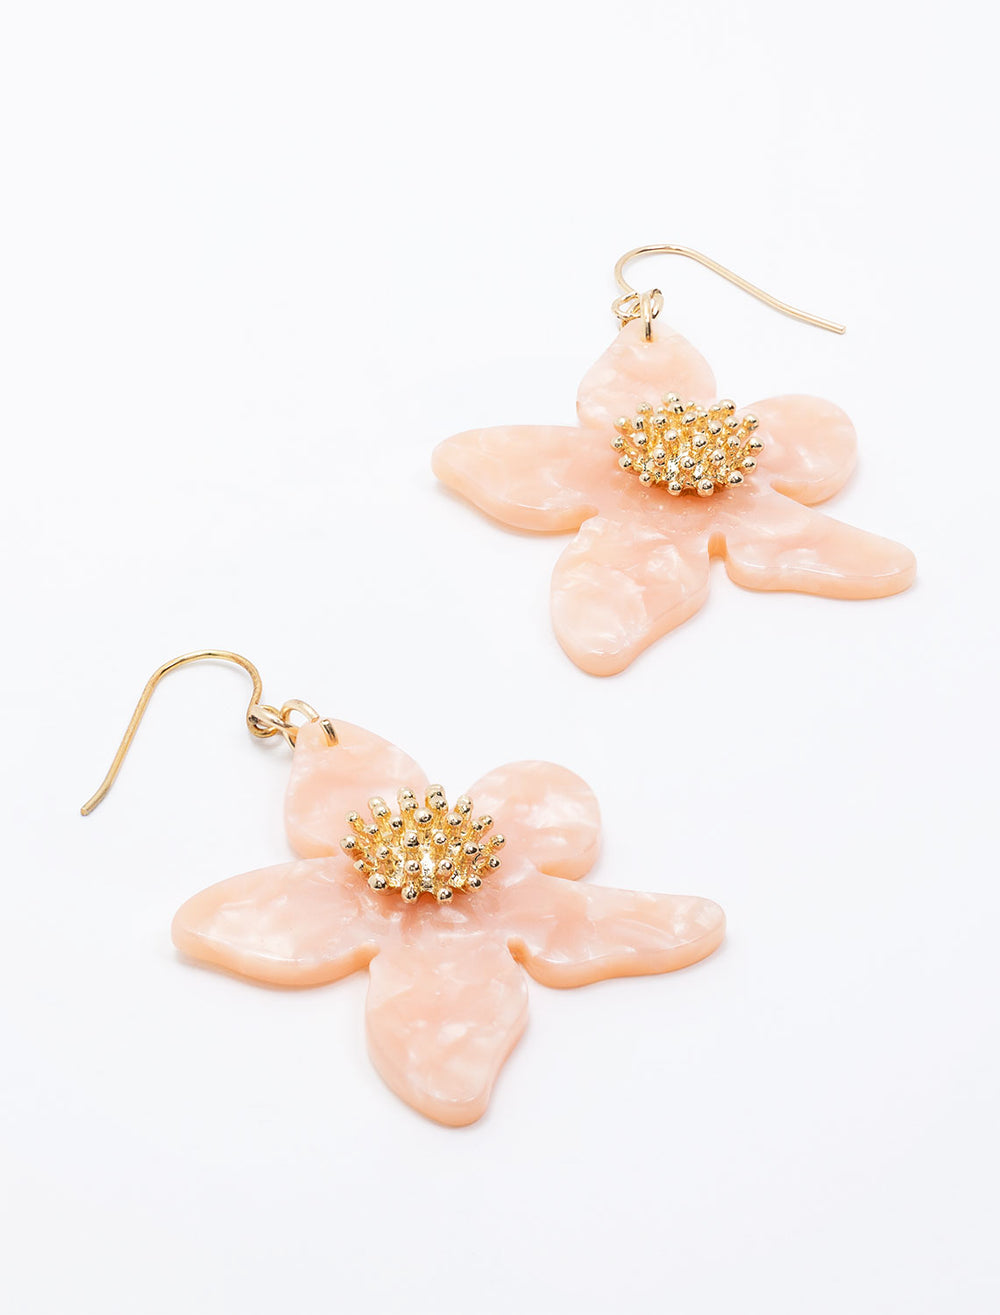 Laydown of West Eleventh's pink flower earrings.